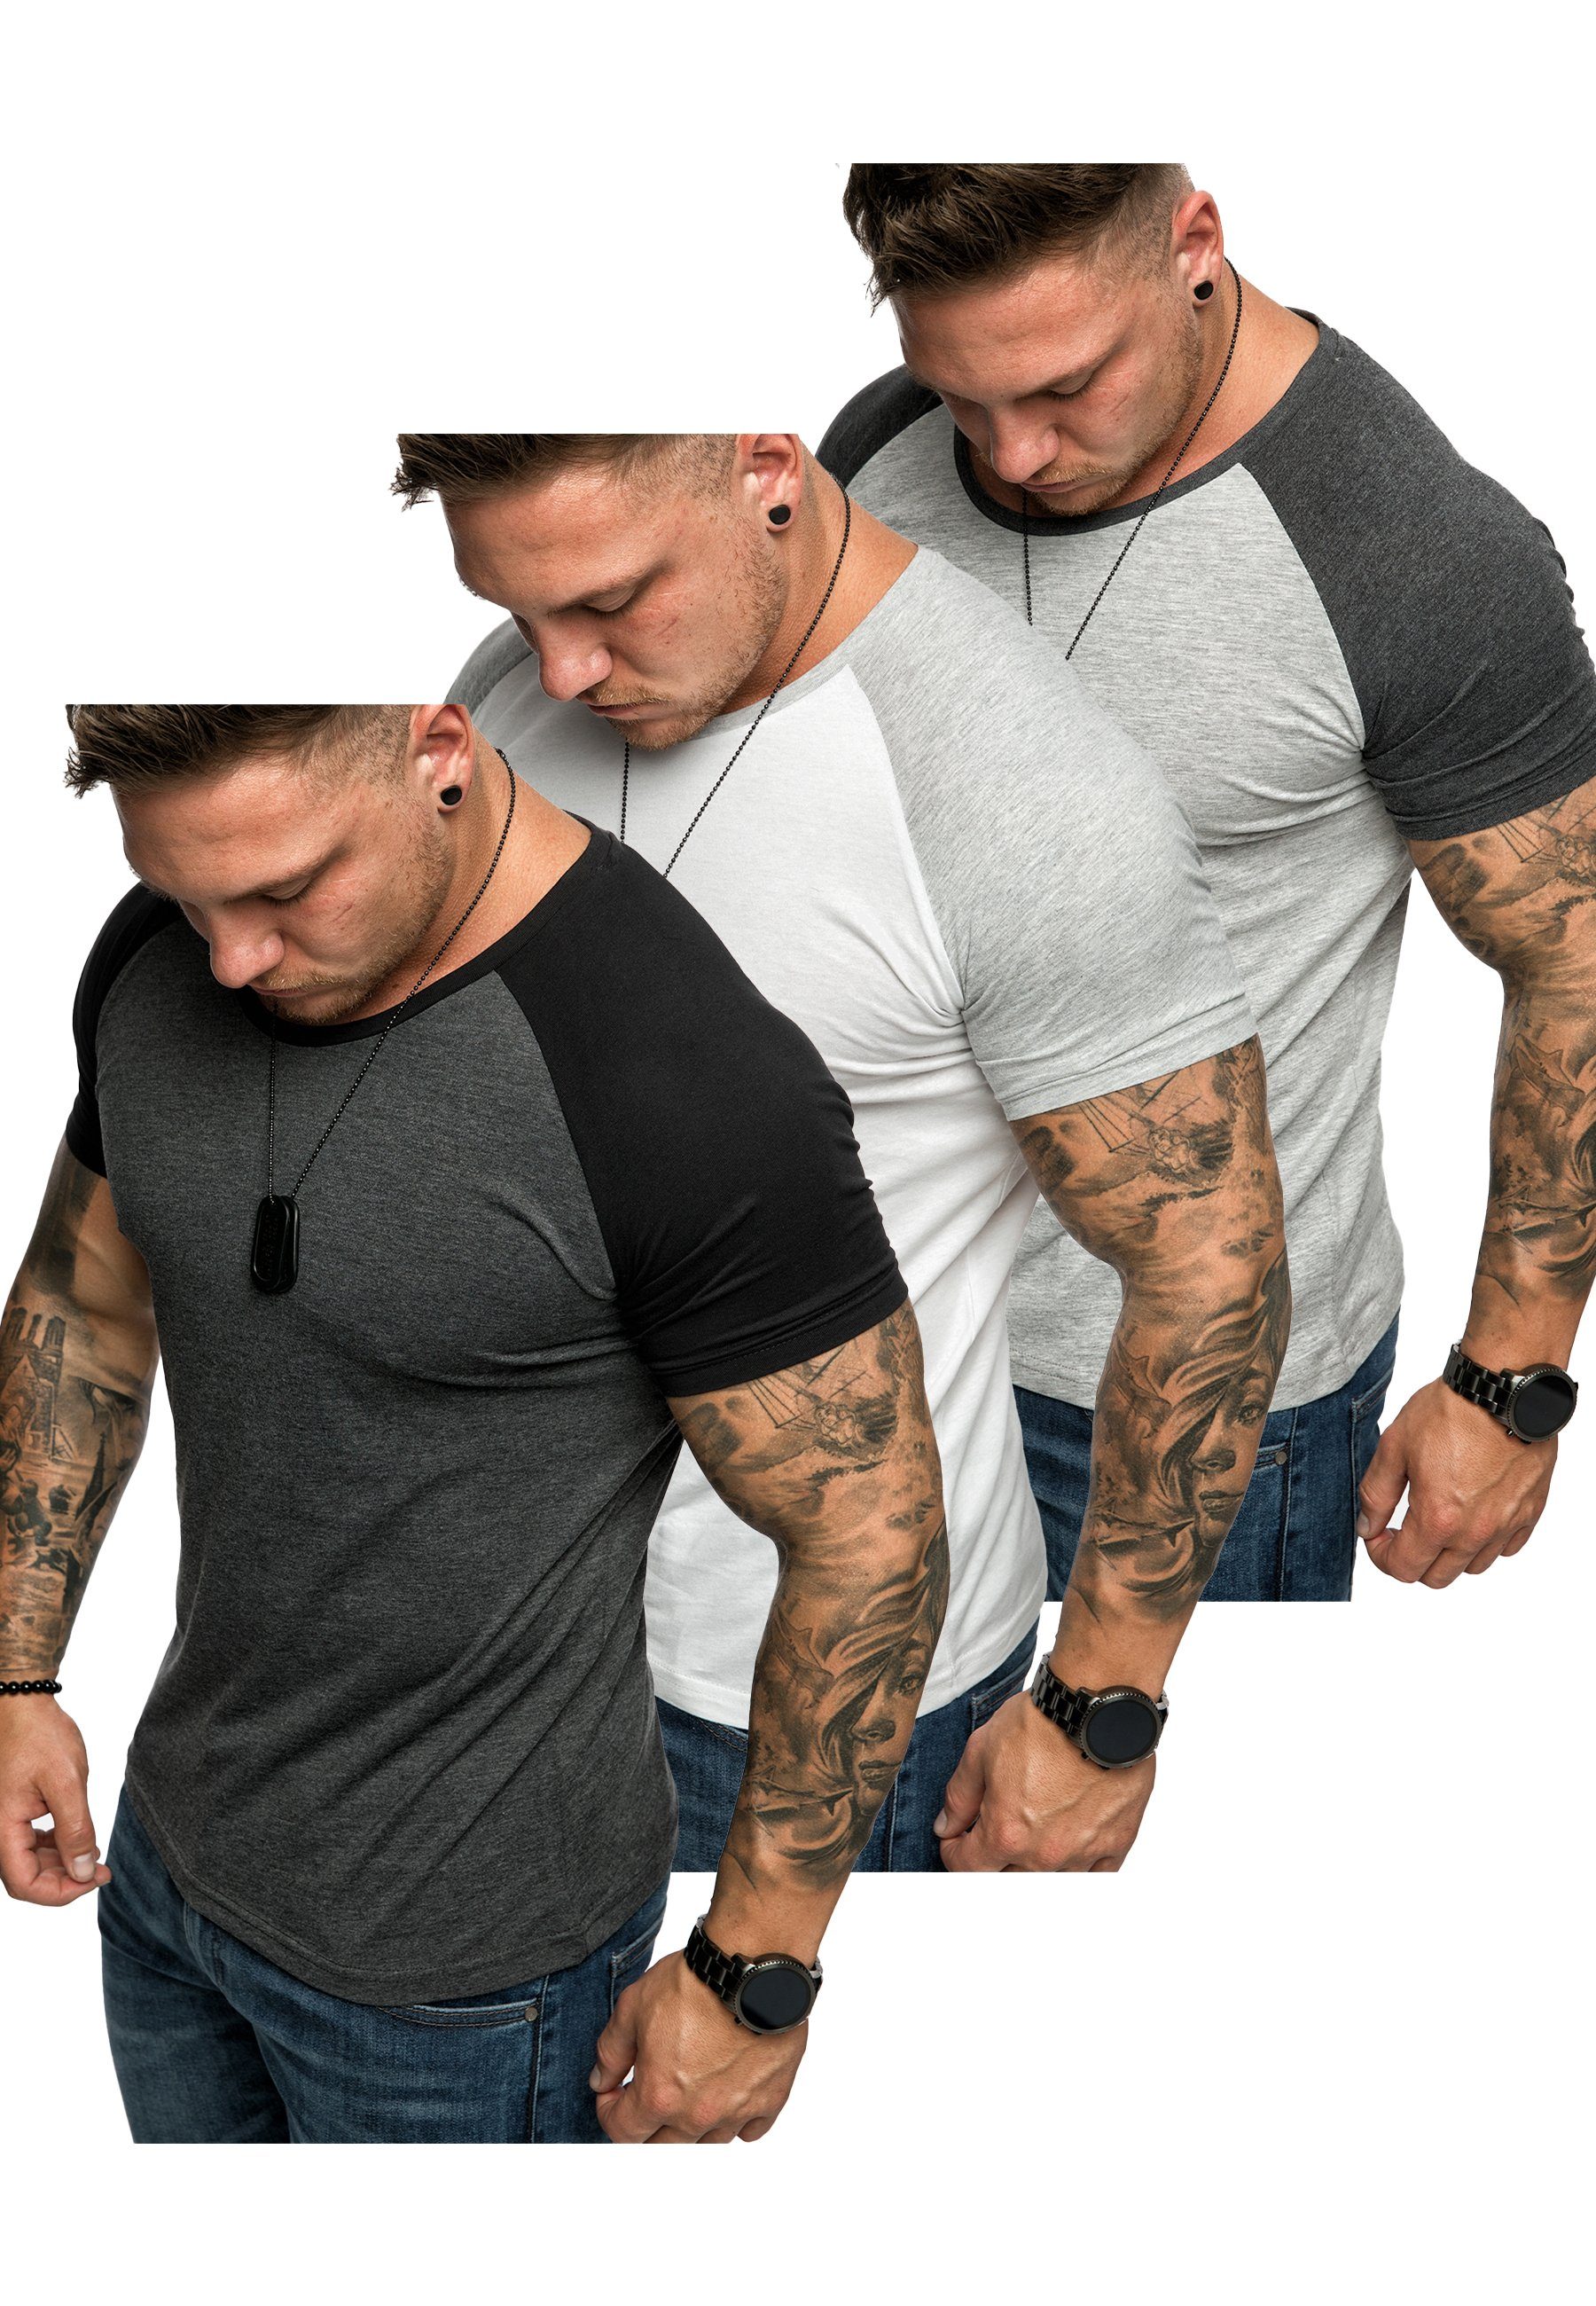 Oversize Basic Kontrast 3. + T-Shirts (Anthrazit/Schwarz T-Shirt Herren Grau/Anthrazit) (3er-Pack) Weiß/Grau + 3er-Pack T-Shirt Amaci&Sons SALEM Raglan